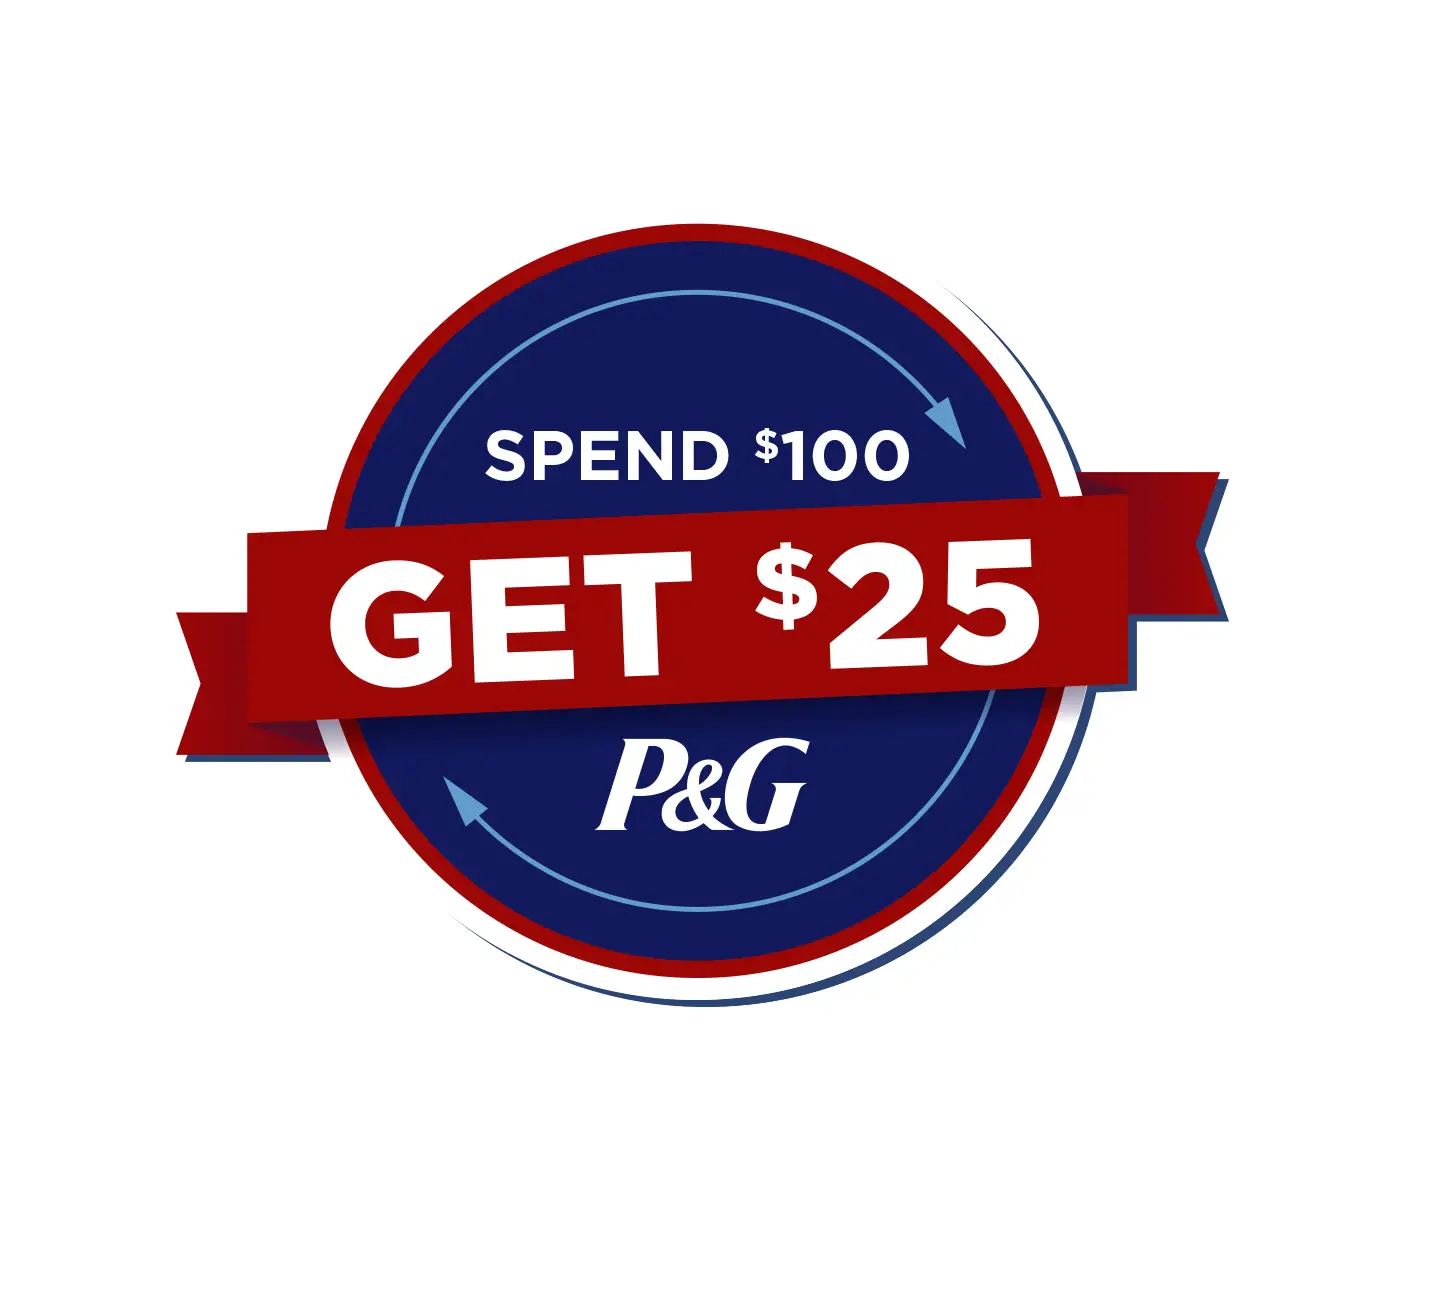 Costco P&G Spend $100 Get $25 Deal